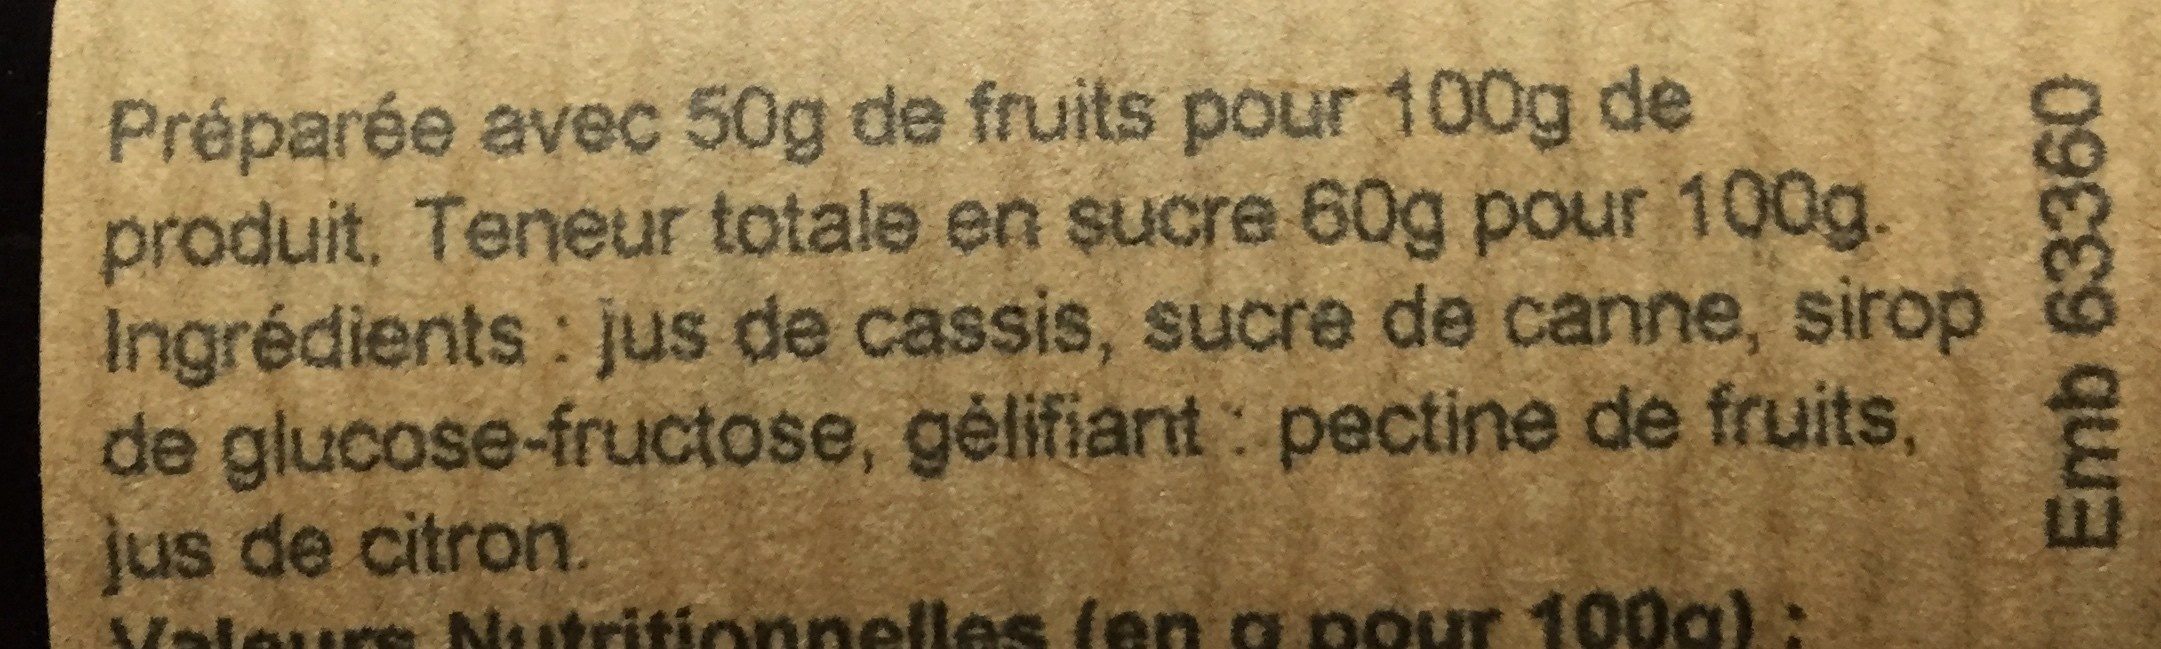 Gelée extra cassis - Ingredients - fr